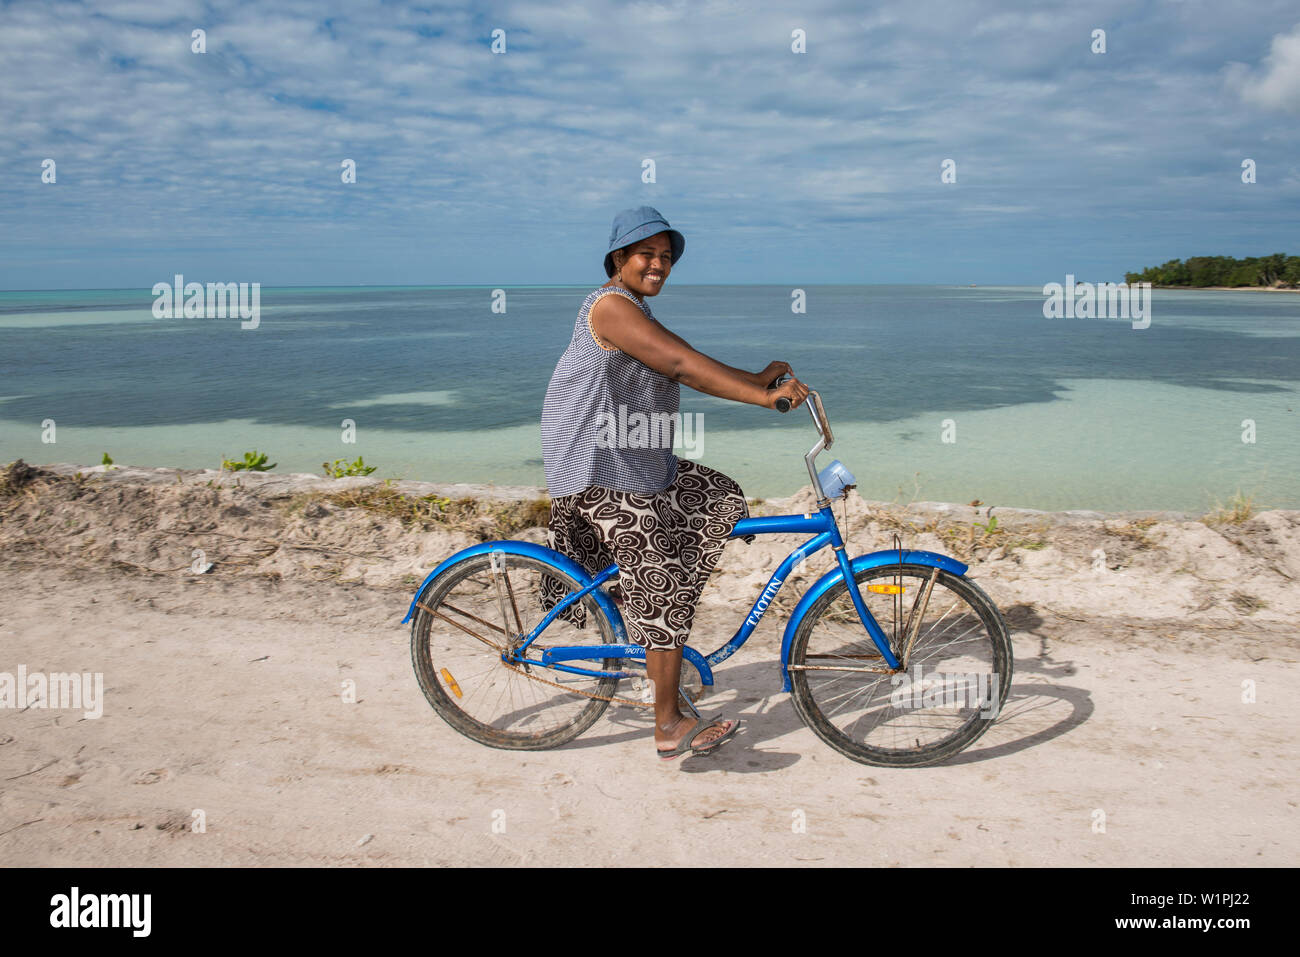 A woman in a blue hat and long skirt rides a blue bicycle along the water, Butaritari Atoll, Gilbert Islands, Kiribati, South Pacific Stock Photo